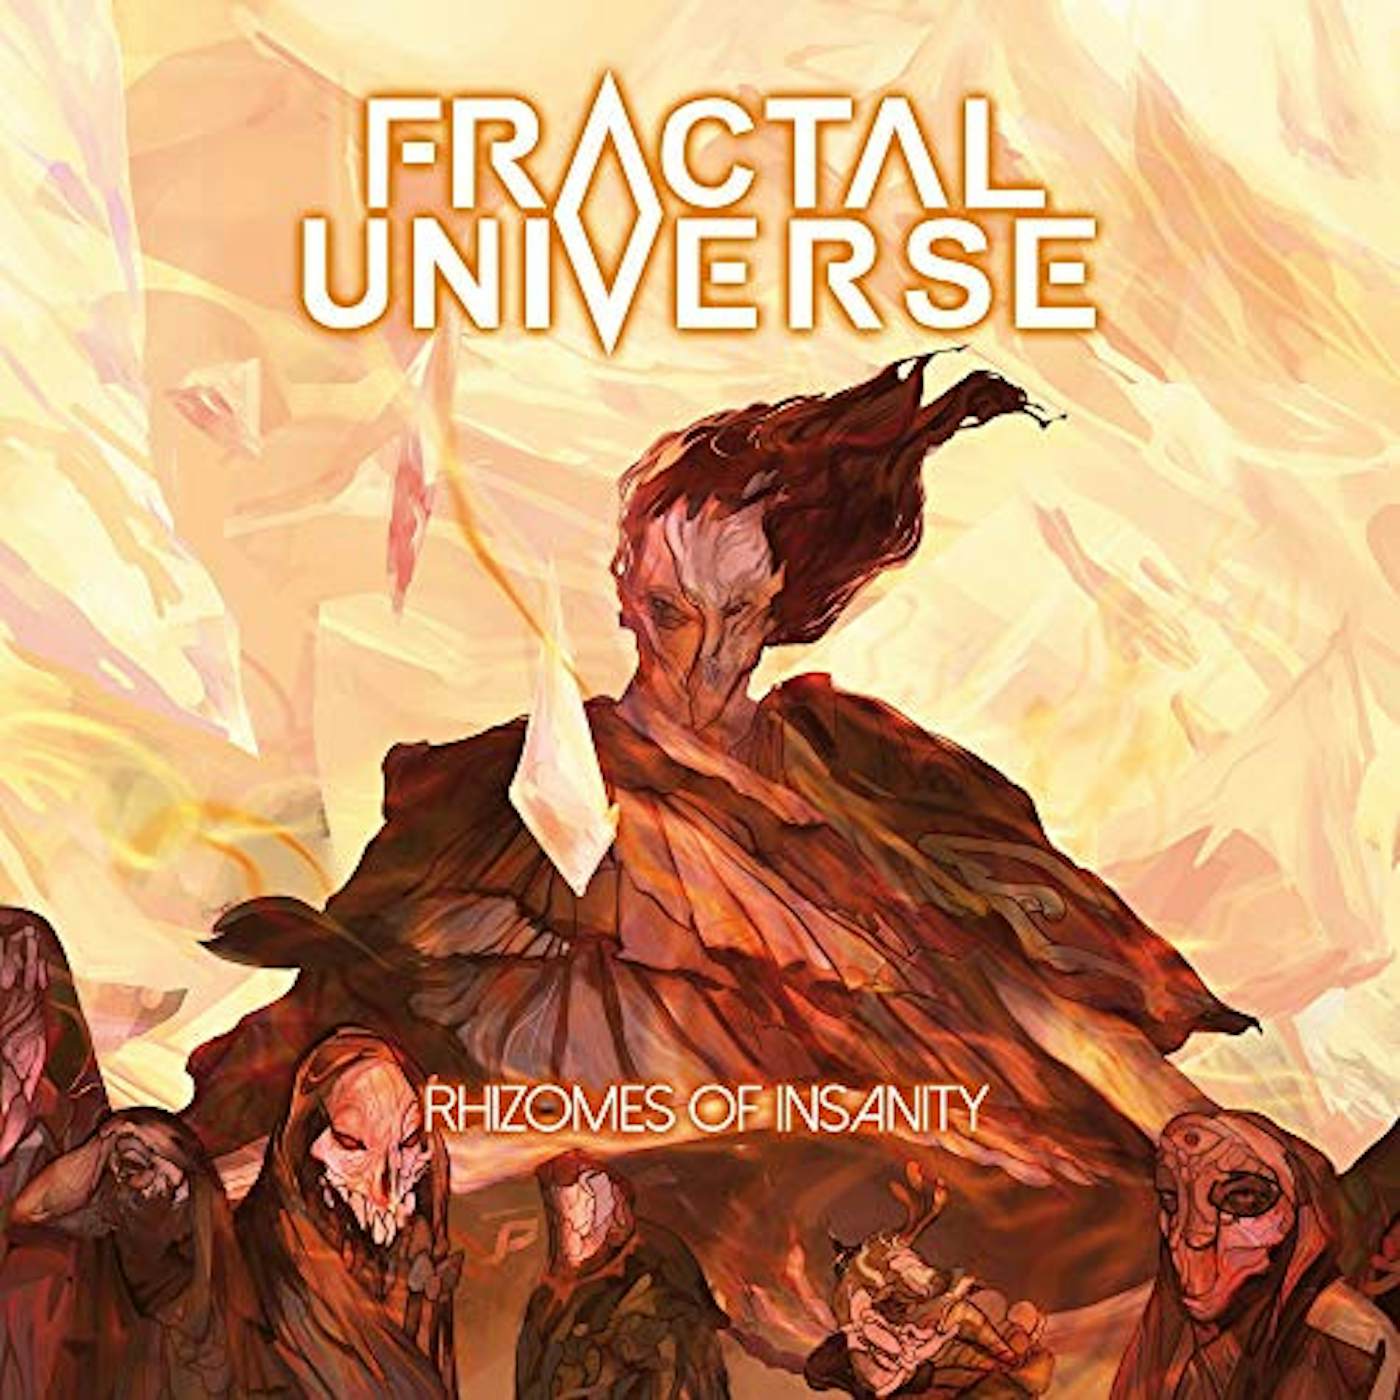 Fractal Universe RHIZOMES OF INSANITY CD